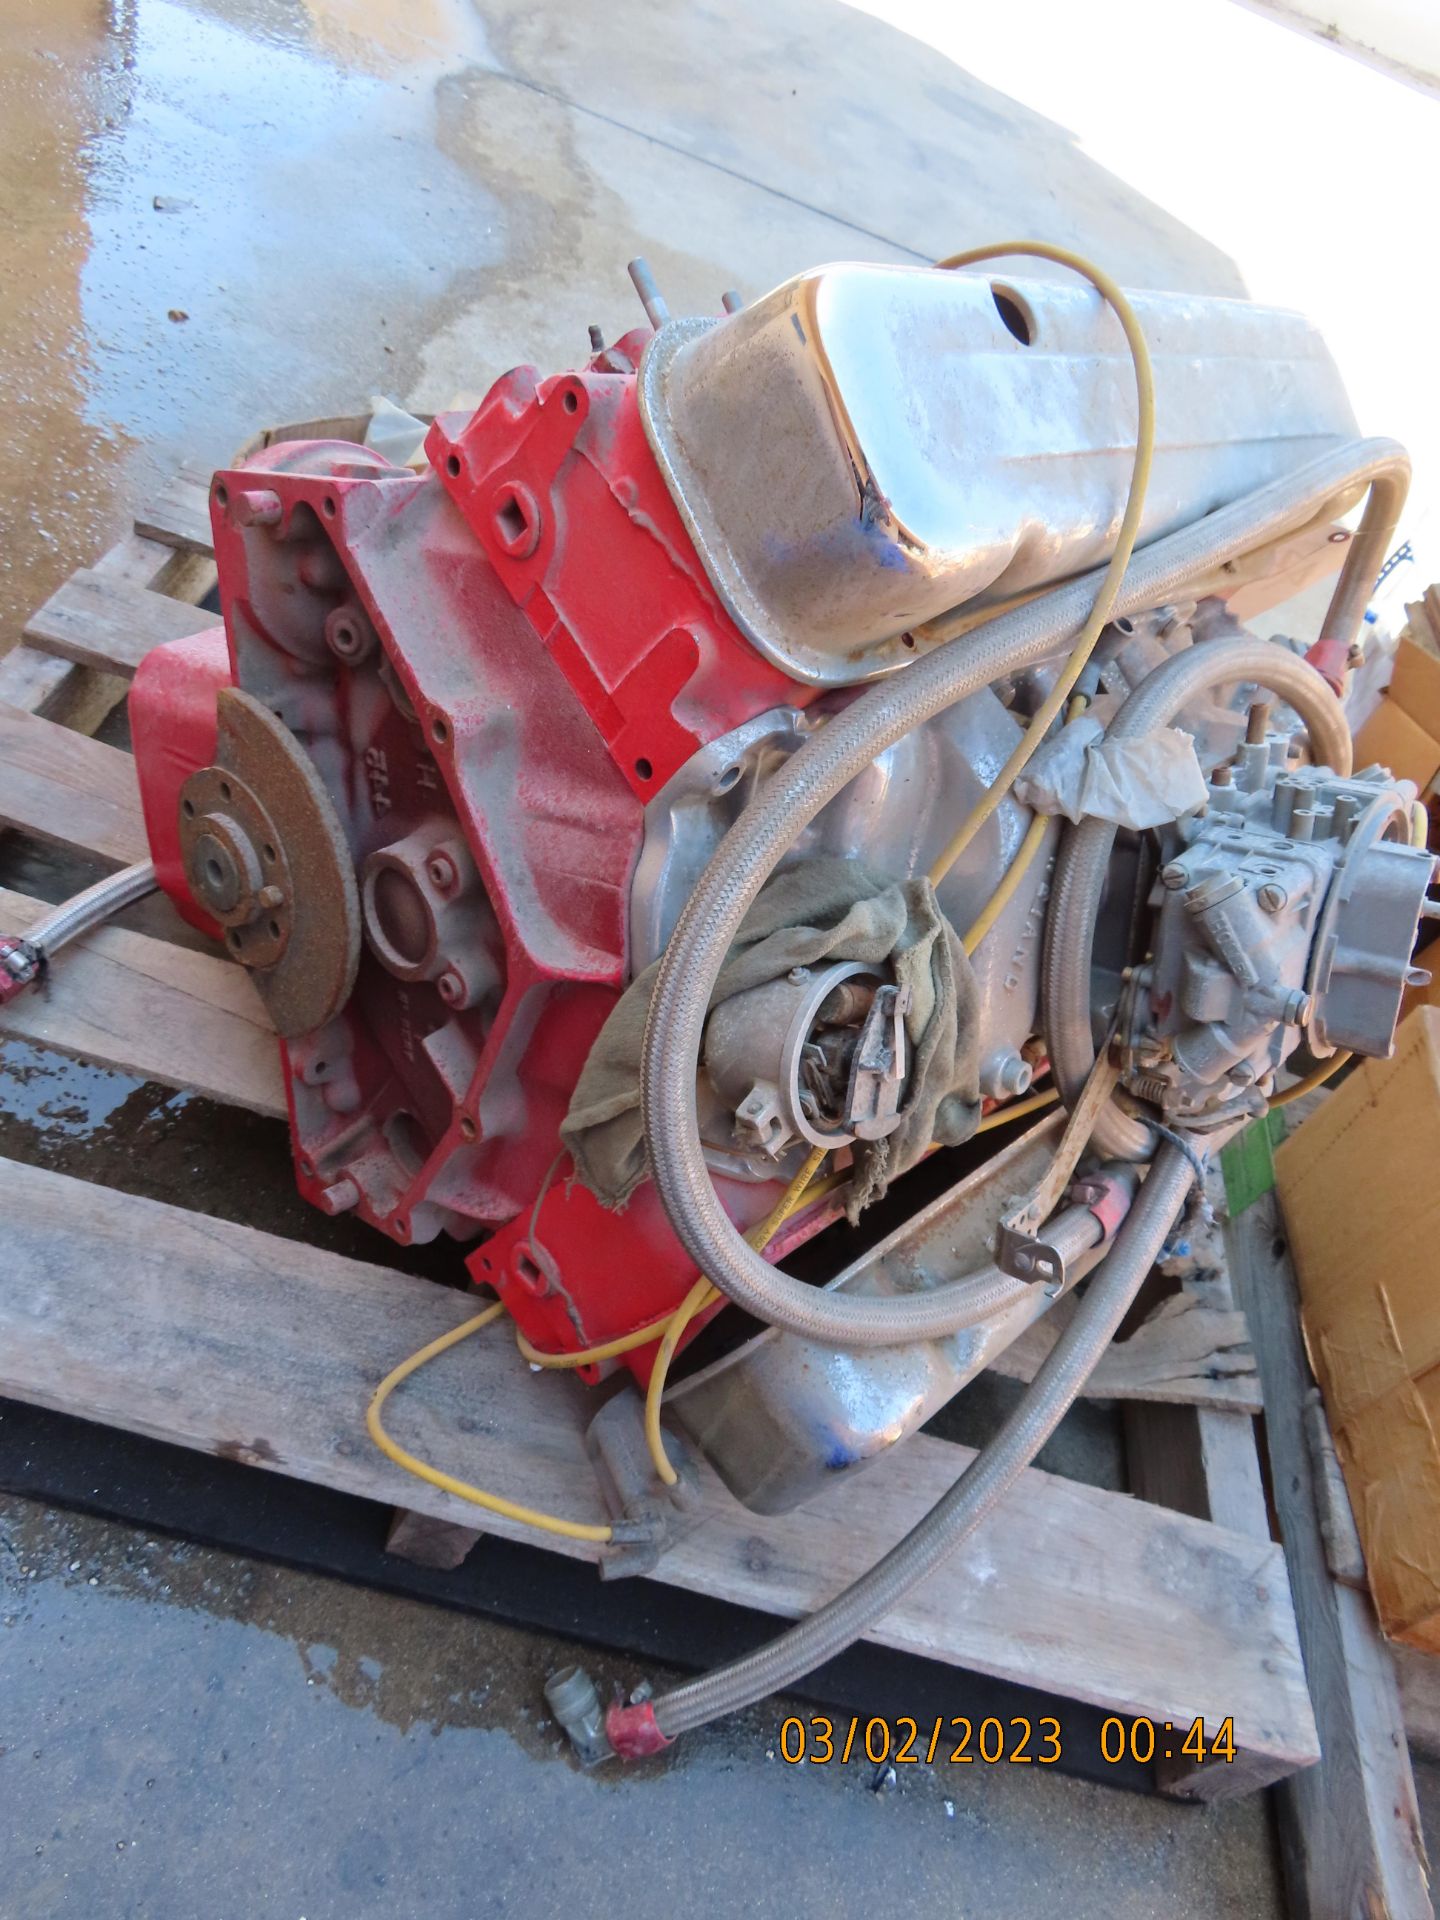 Chevy 445 V-8 Motor - Image 2 of 2